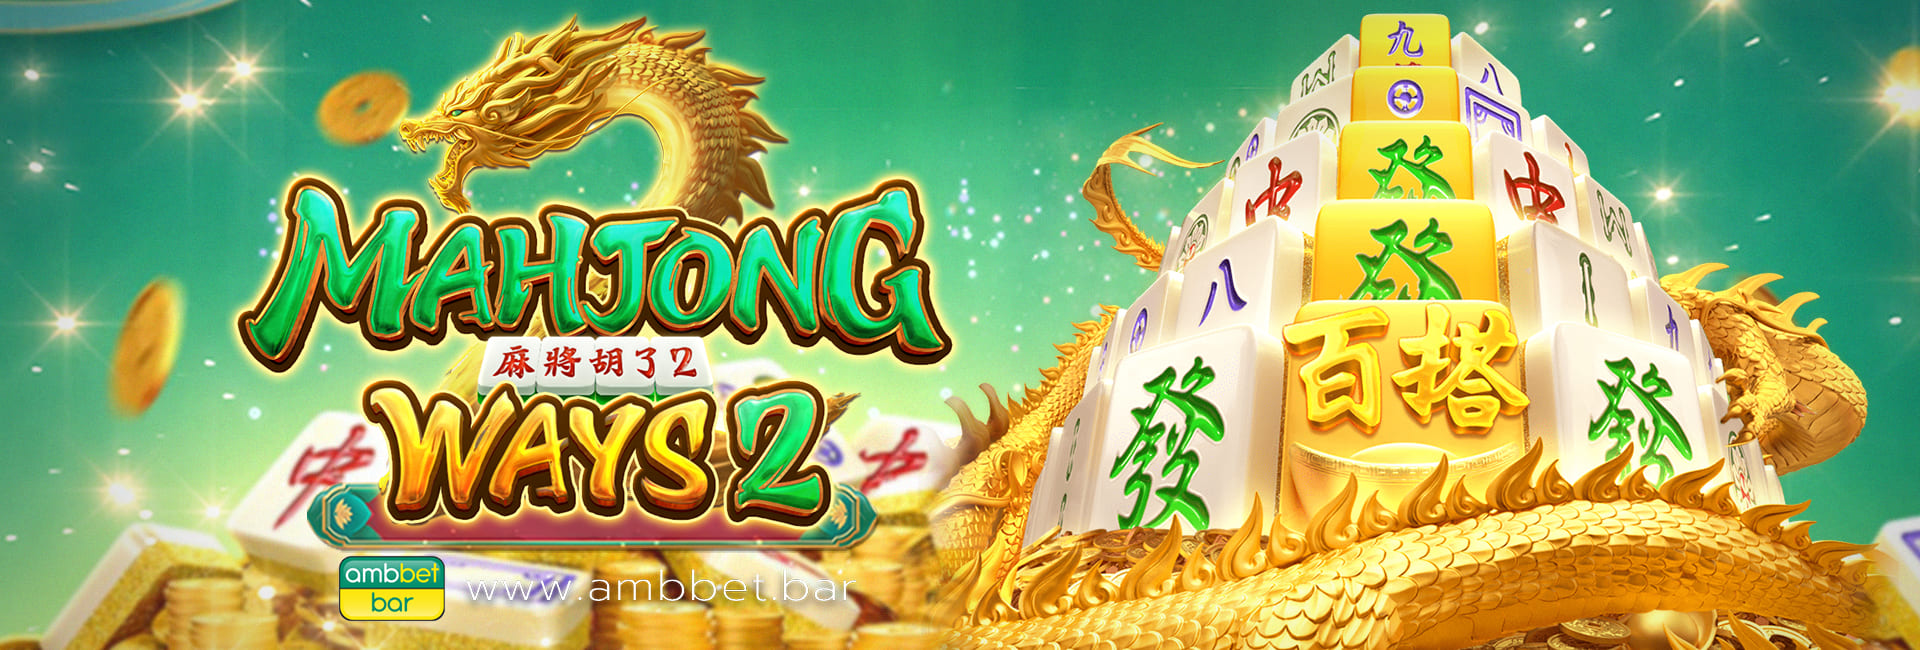 Mahjong Ways 2 banner